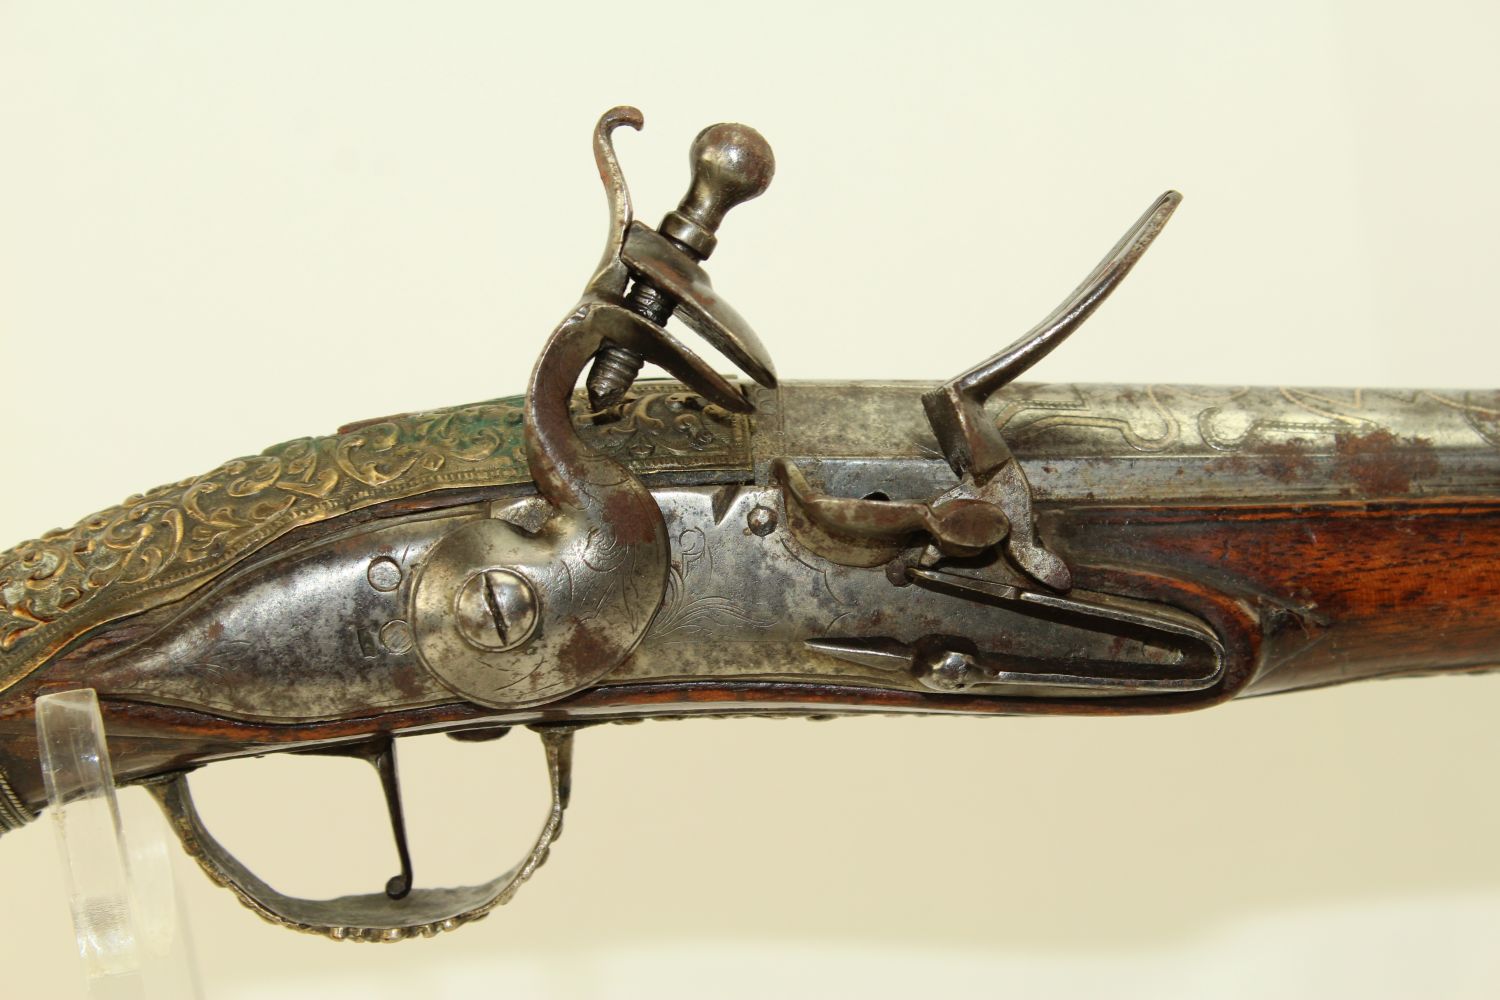 Ottoman Balkan Style Ornate Pistol C&R Antique003 | Ancestry Guns